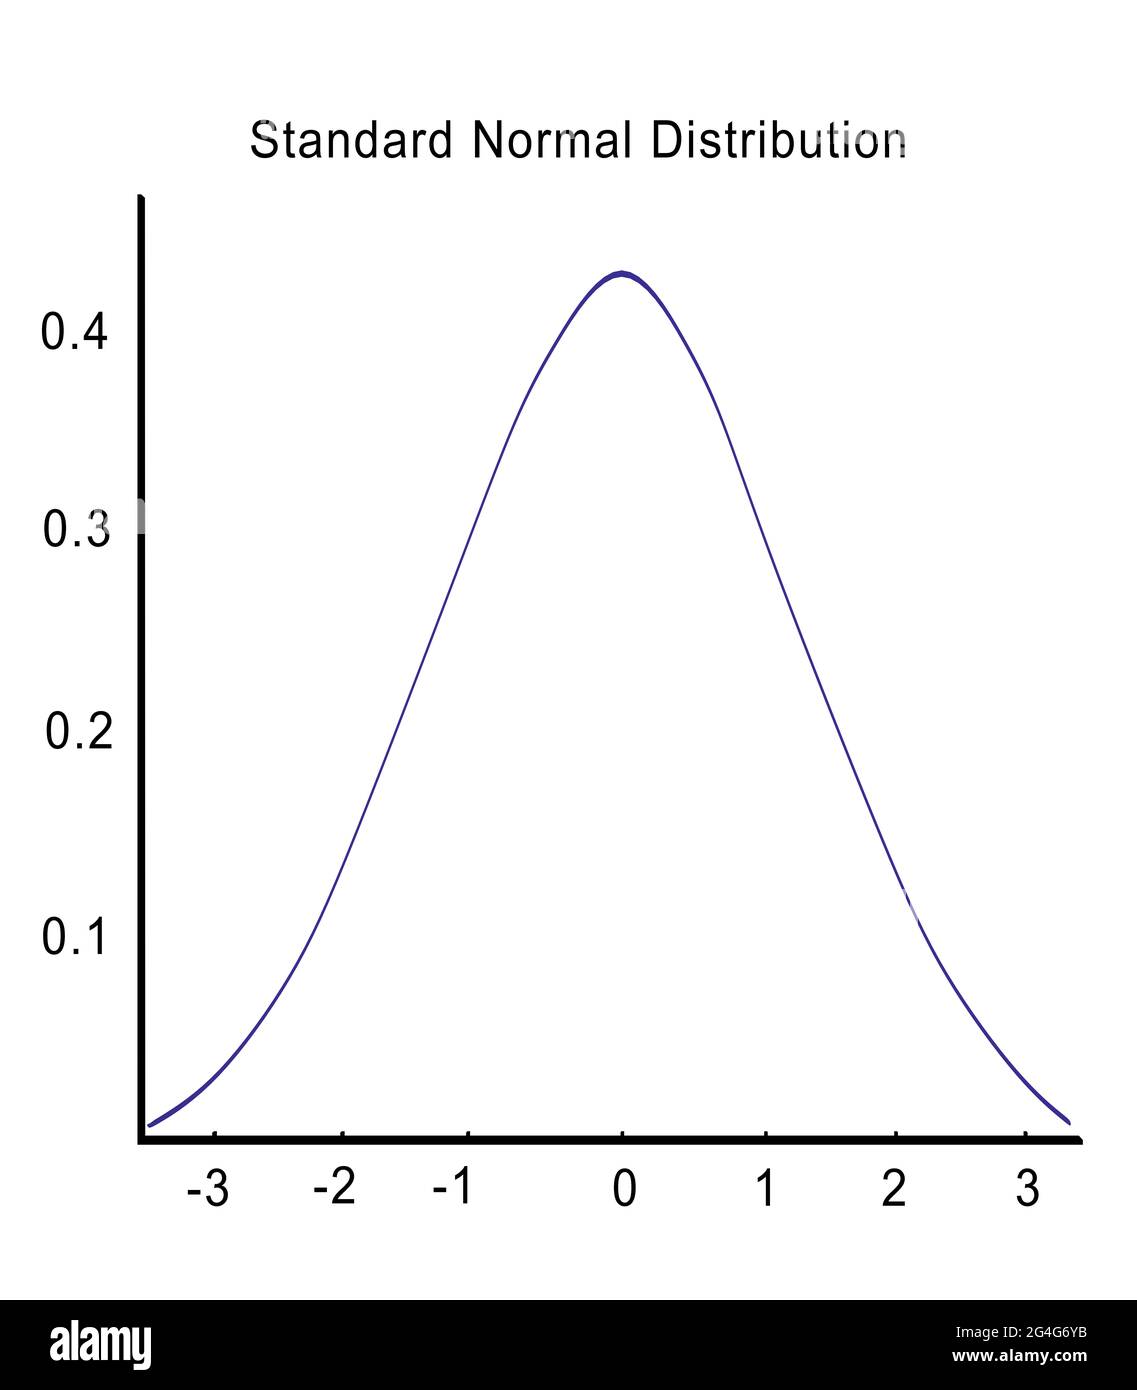 3D illustration of Standard Normal Distribution script above standard normal distribution graph, isolated on white. Stock Photo